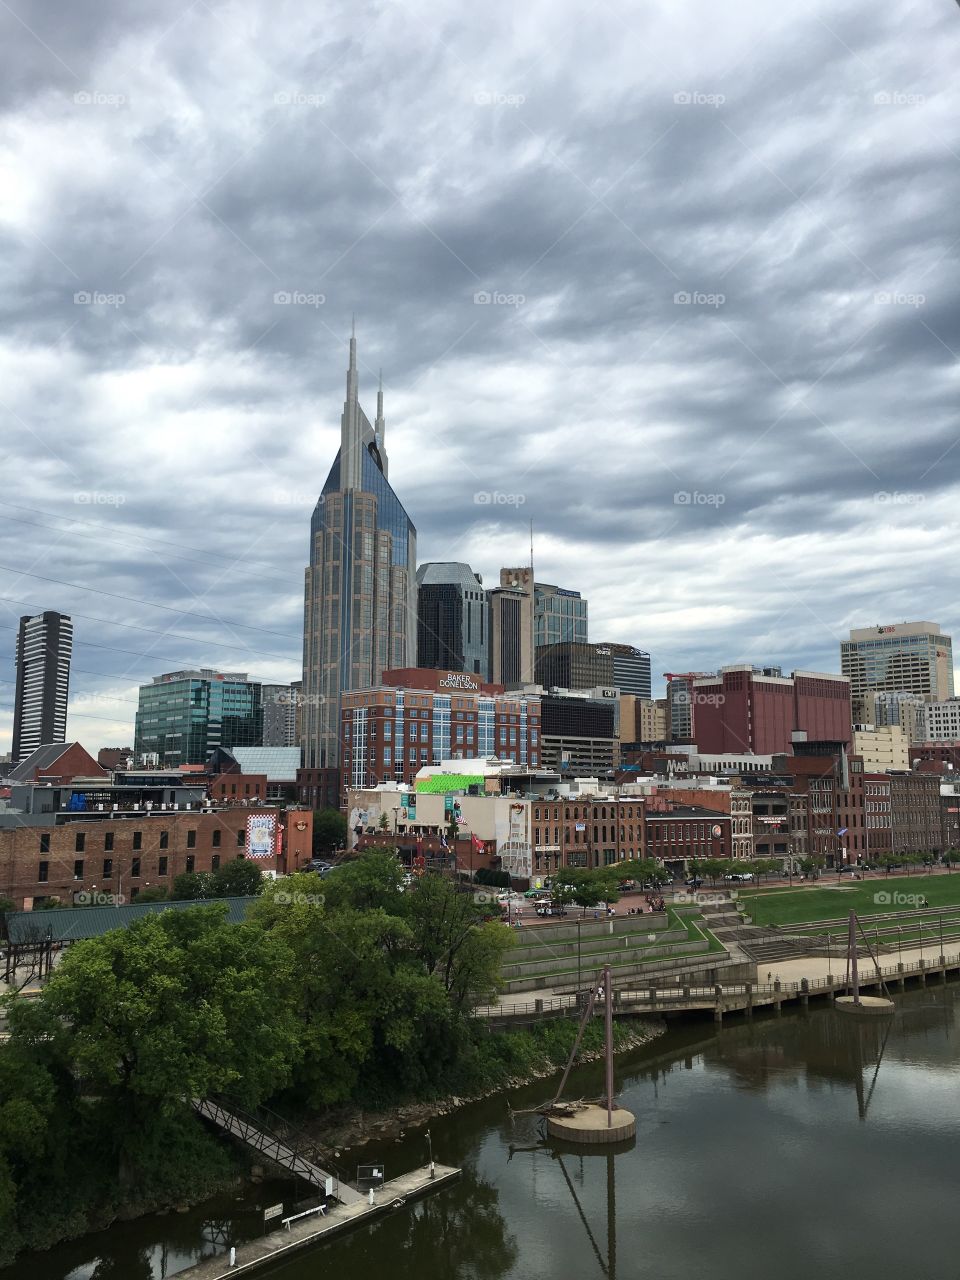 Bat building Nashville Tennessee